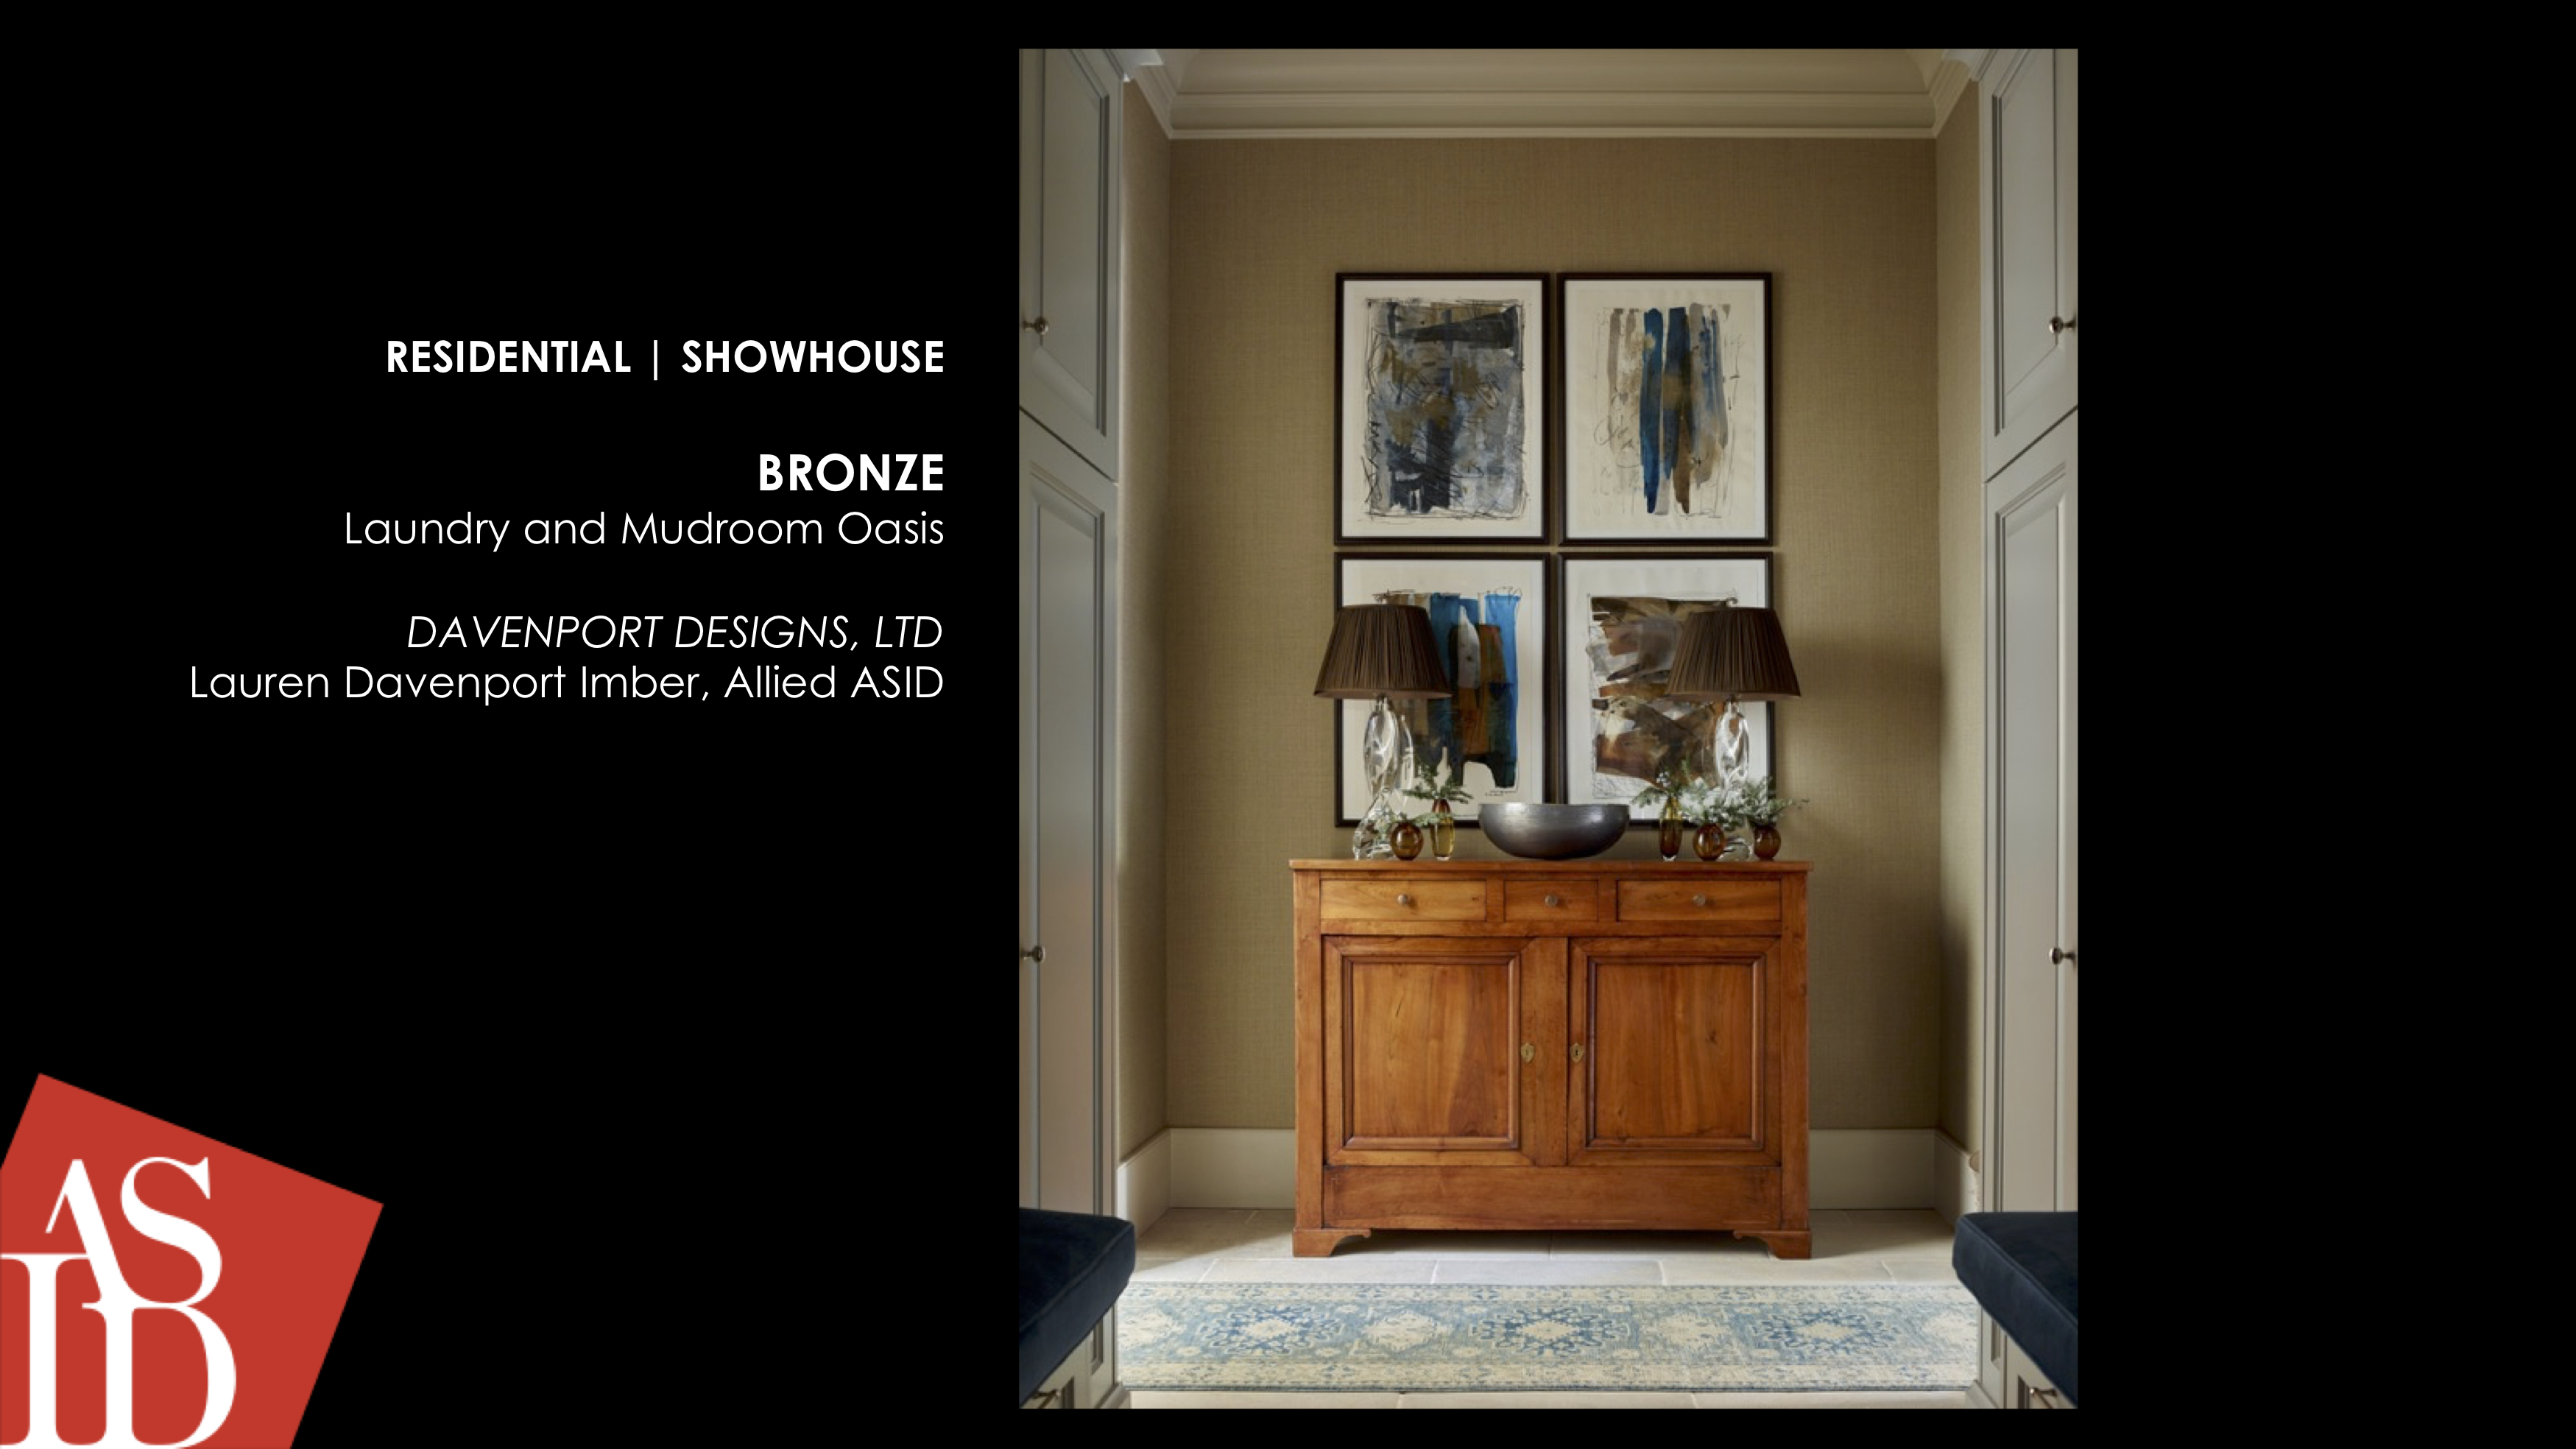 SHOW HOUSE | BRONZE